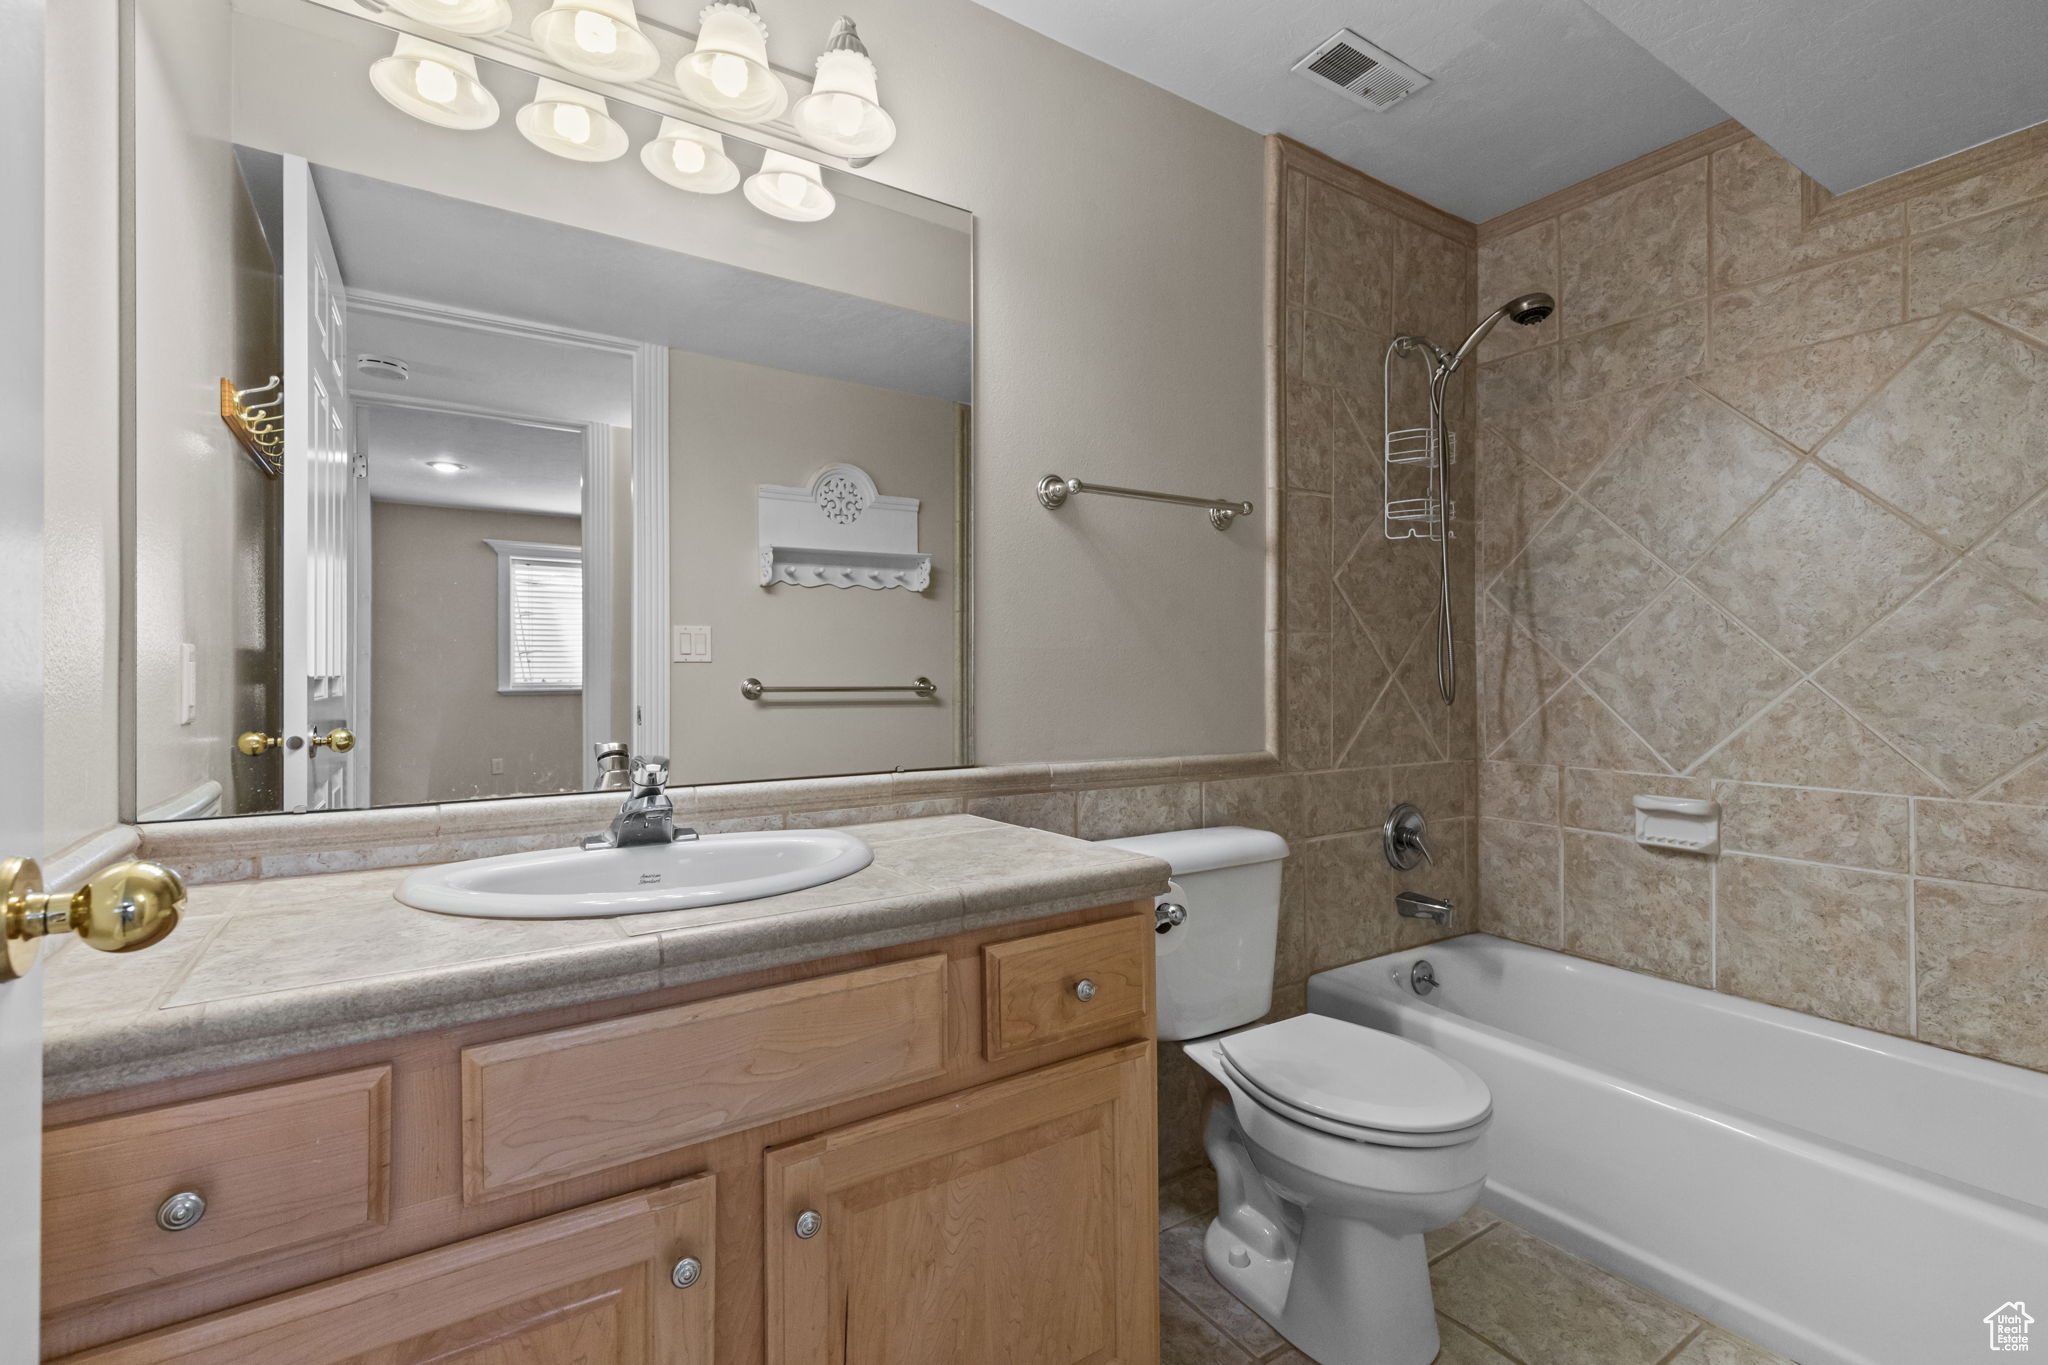 Full bathroom with tiled shower / bath, toilet, tile floors, and vanity